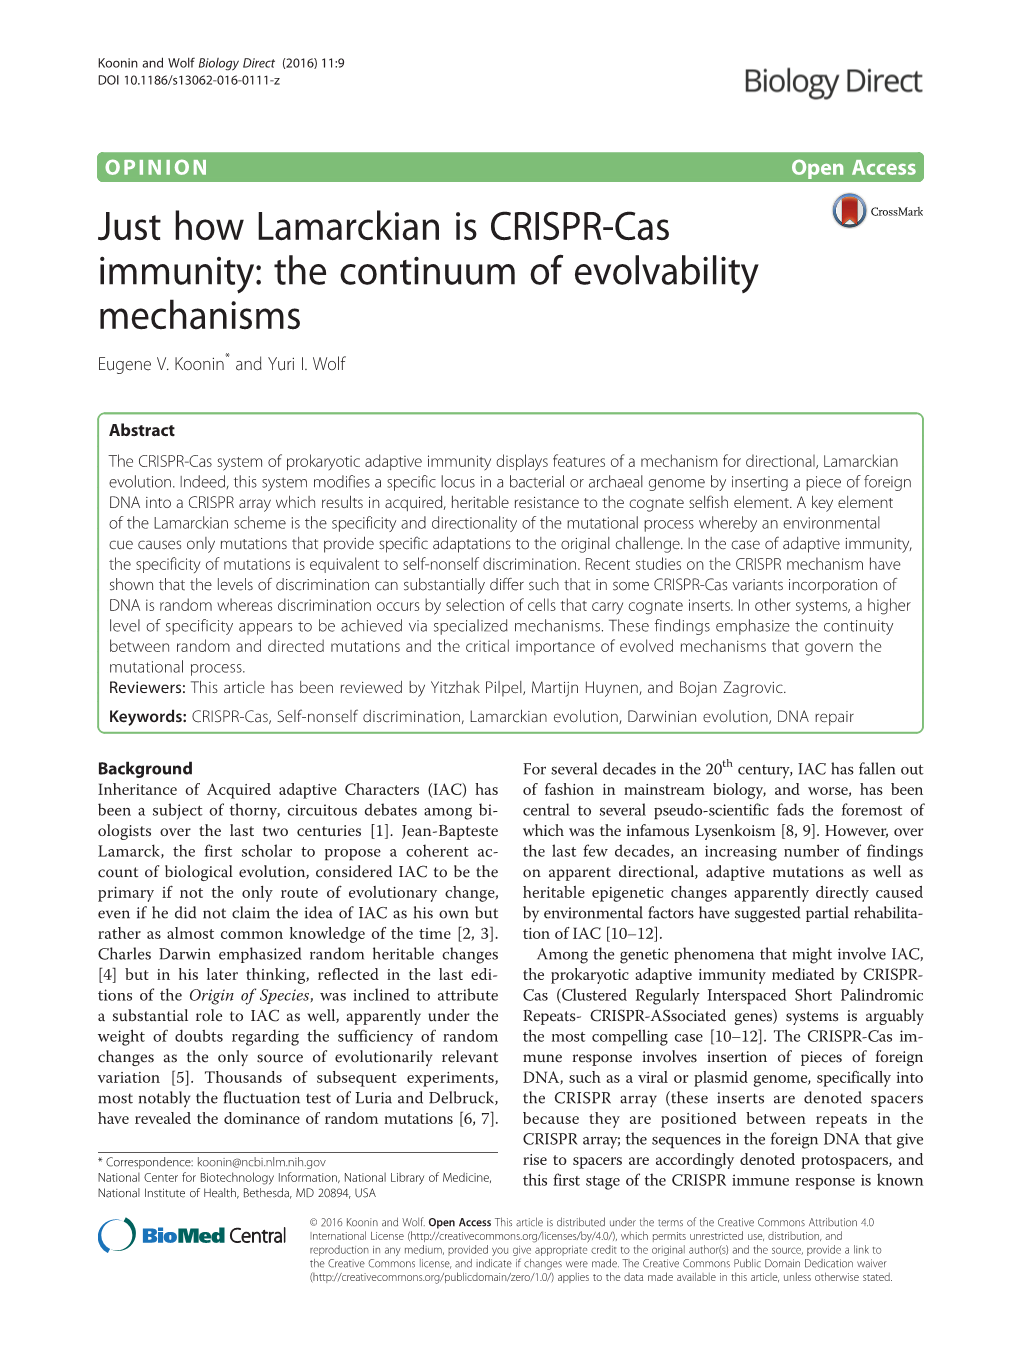 Just How Lamarckian Is CRISPR-Cas Immunity: the Continuum of Evolvability Mechanisms Eugene V